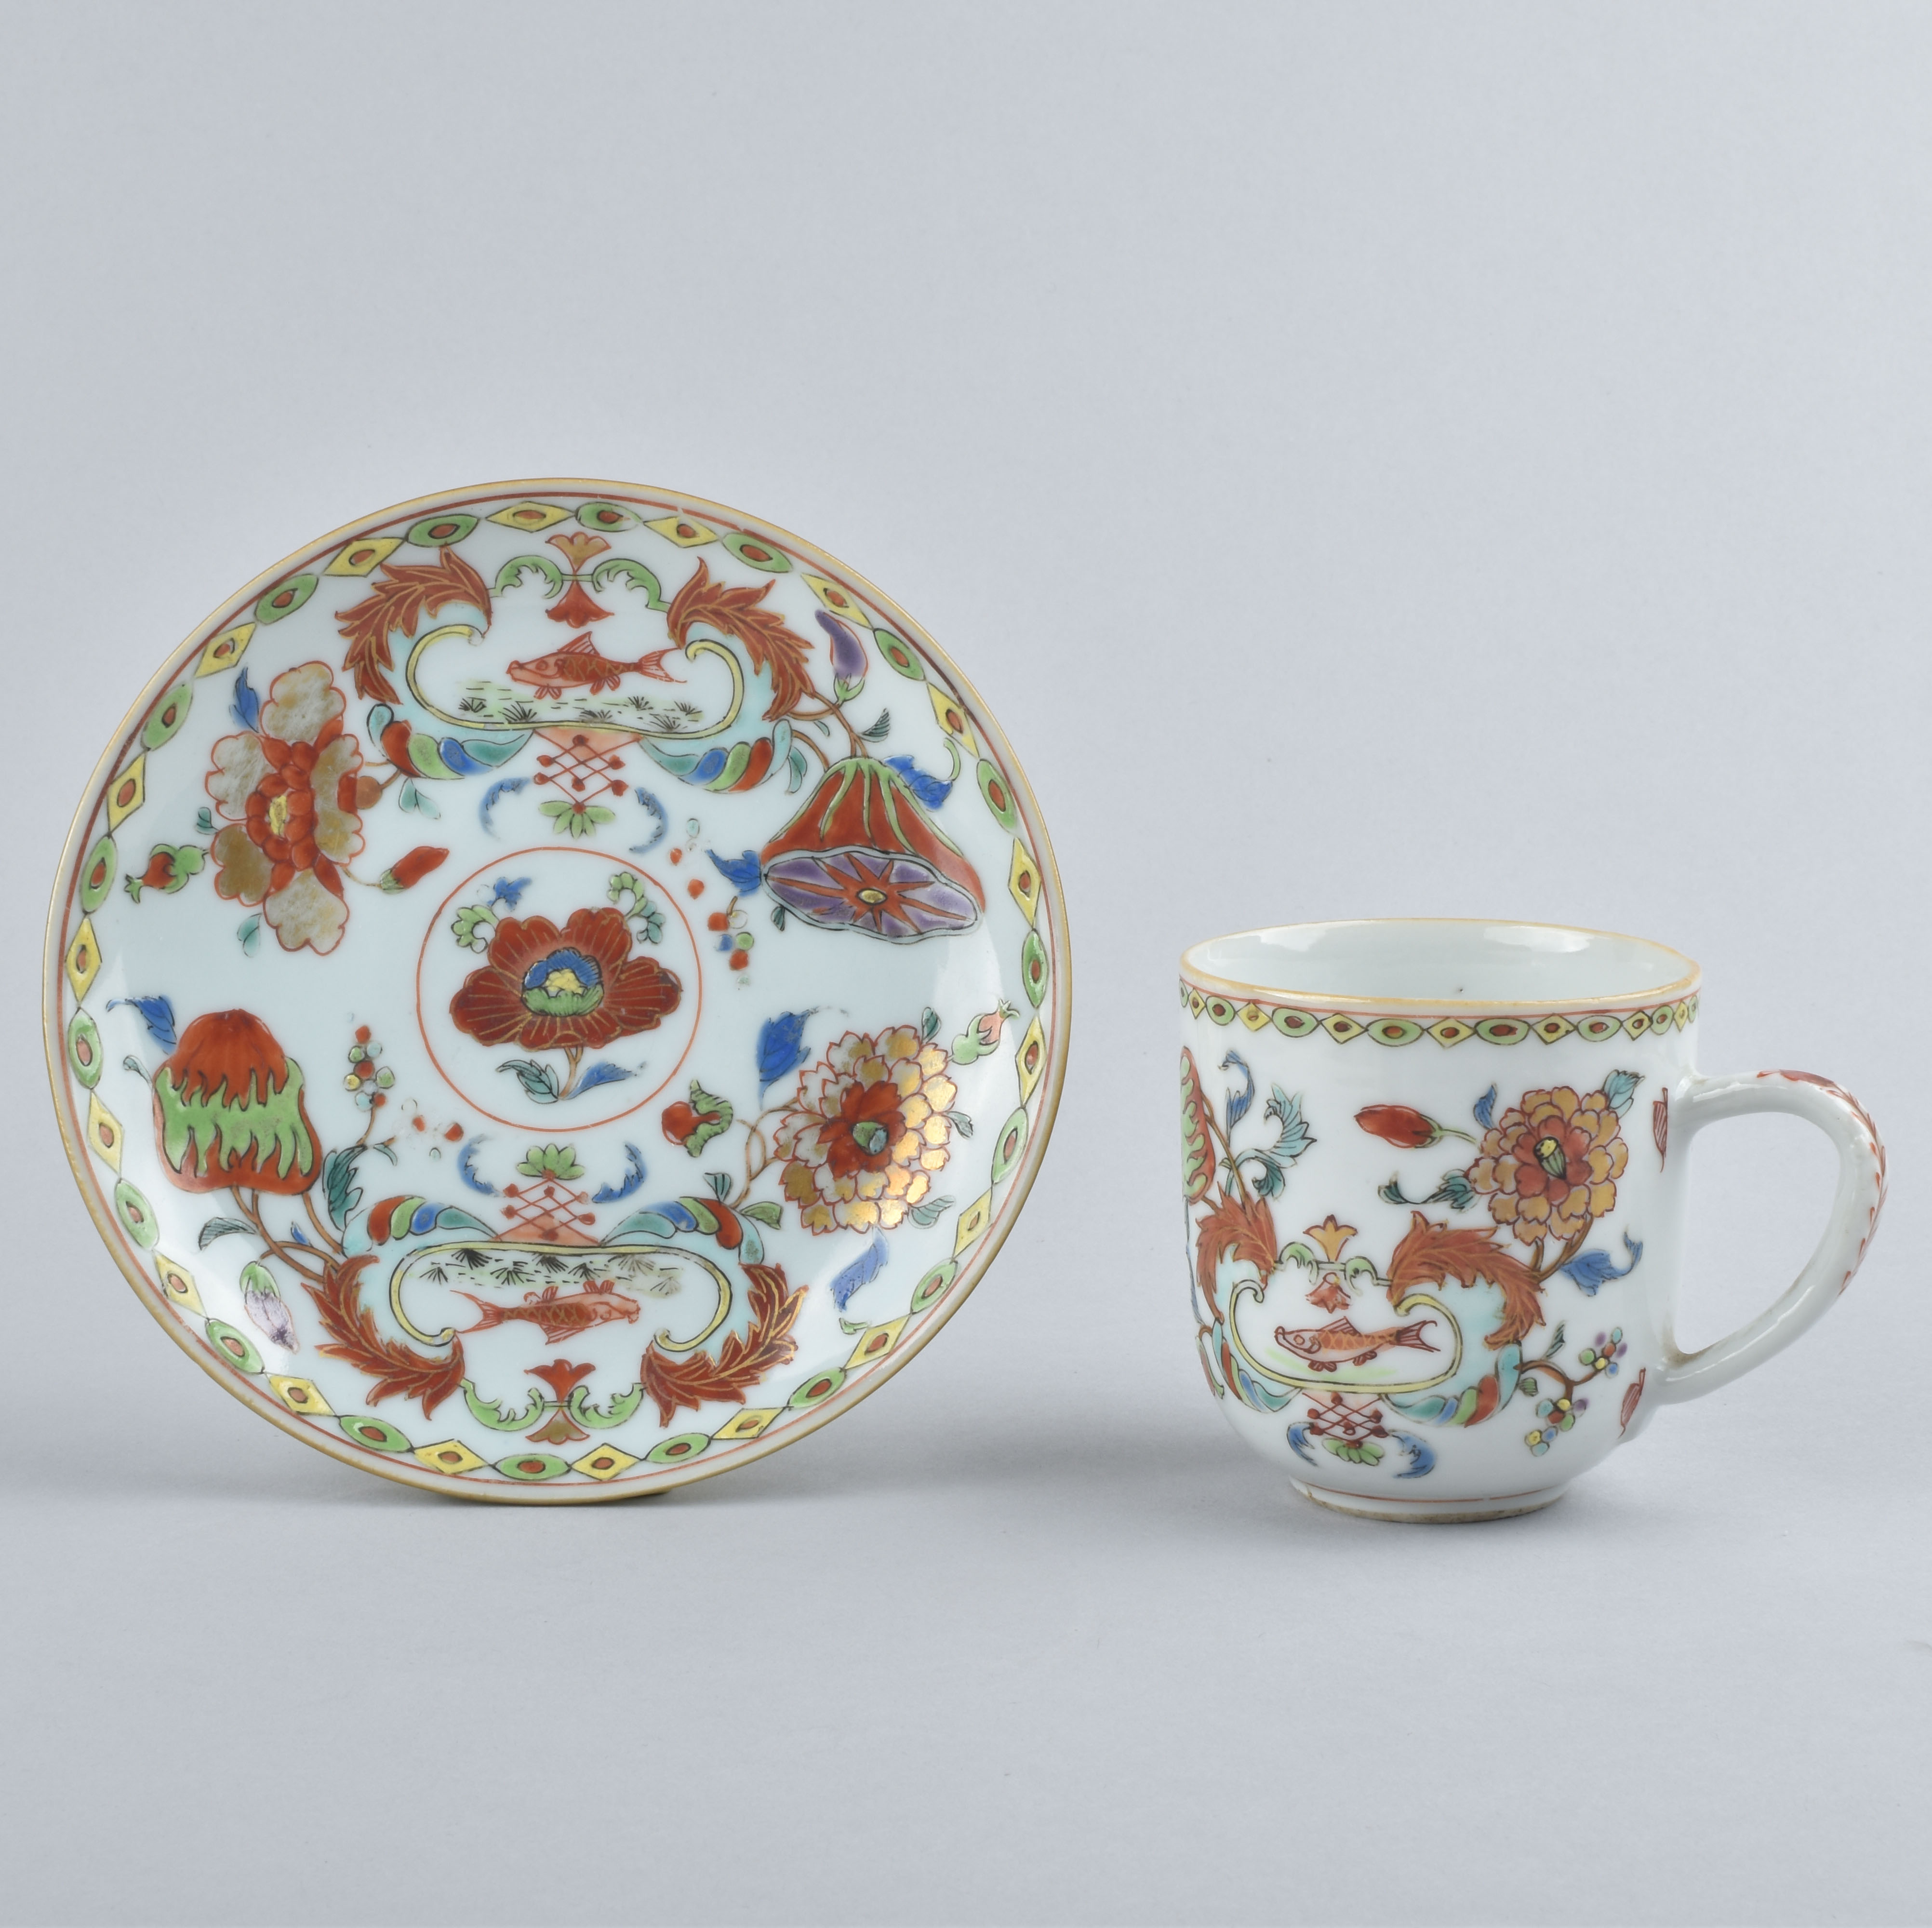 Famille rose Porcelain Qianlong (1735-1795), ca. 1745, China